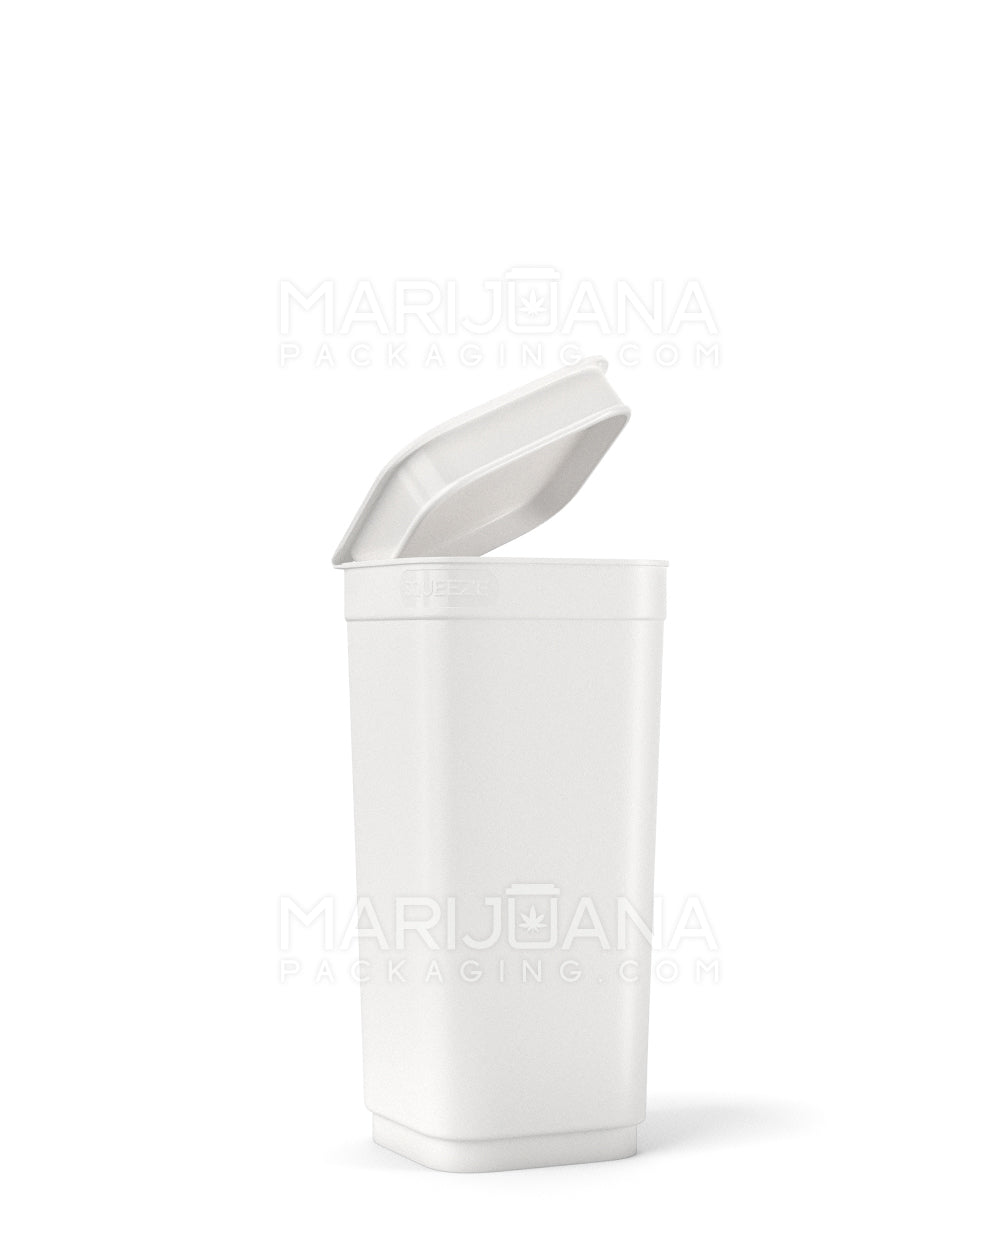 POLLEN GEAR | 100% Recyclable Opaque White Pop Box Pop Top Bottles | 30dr - 7g - 373 Count - 3